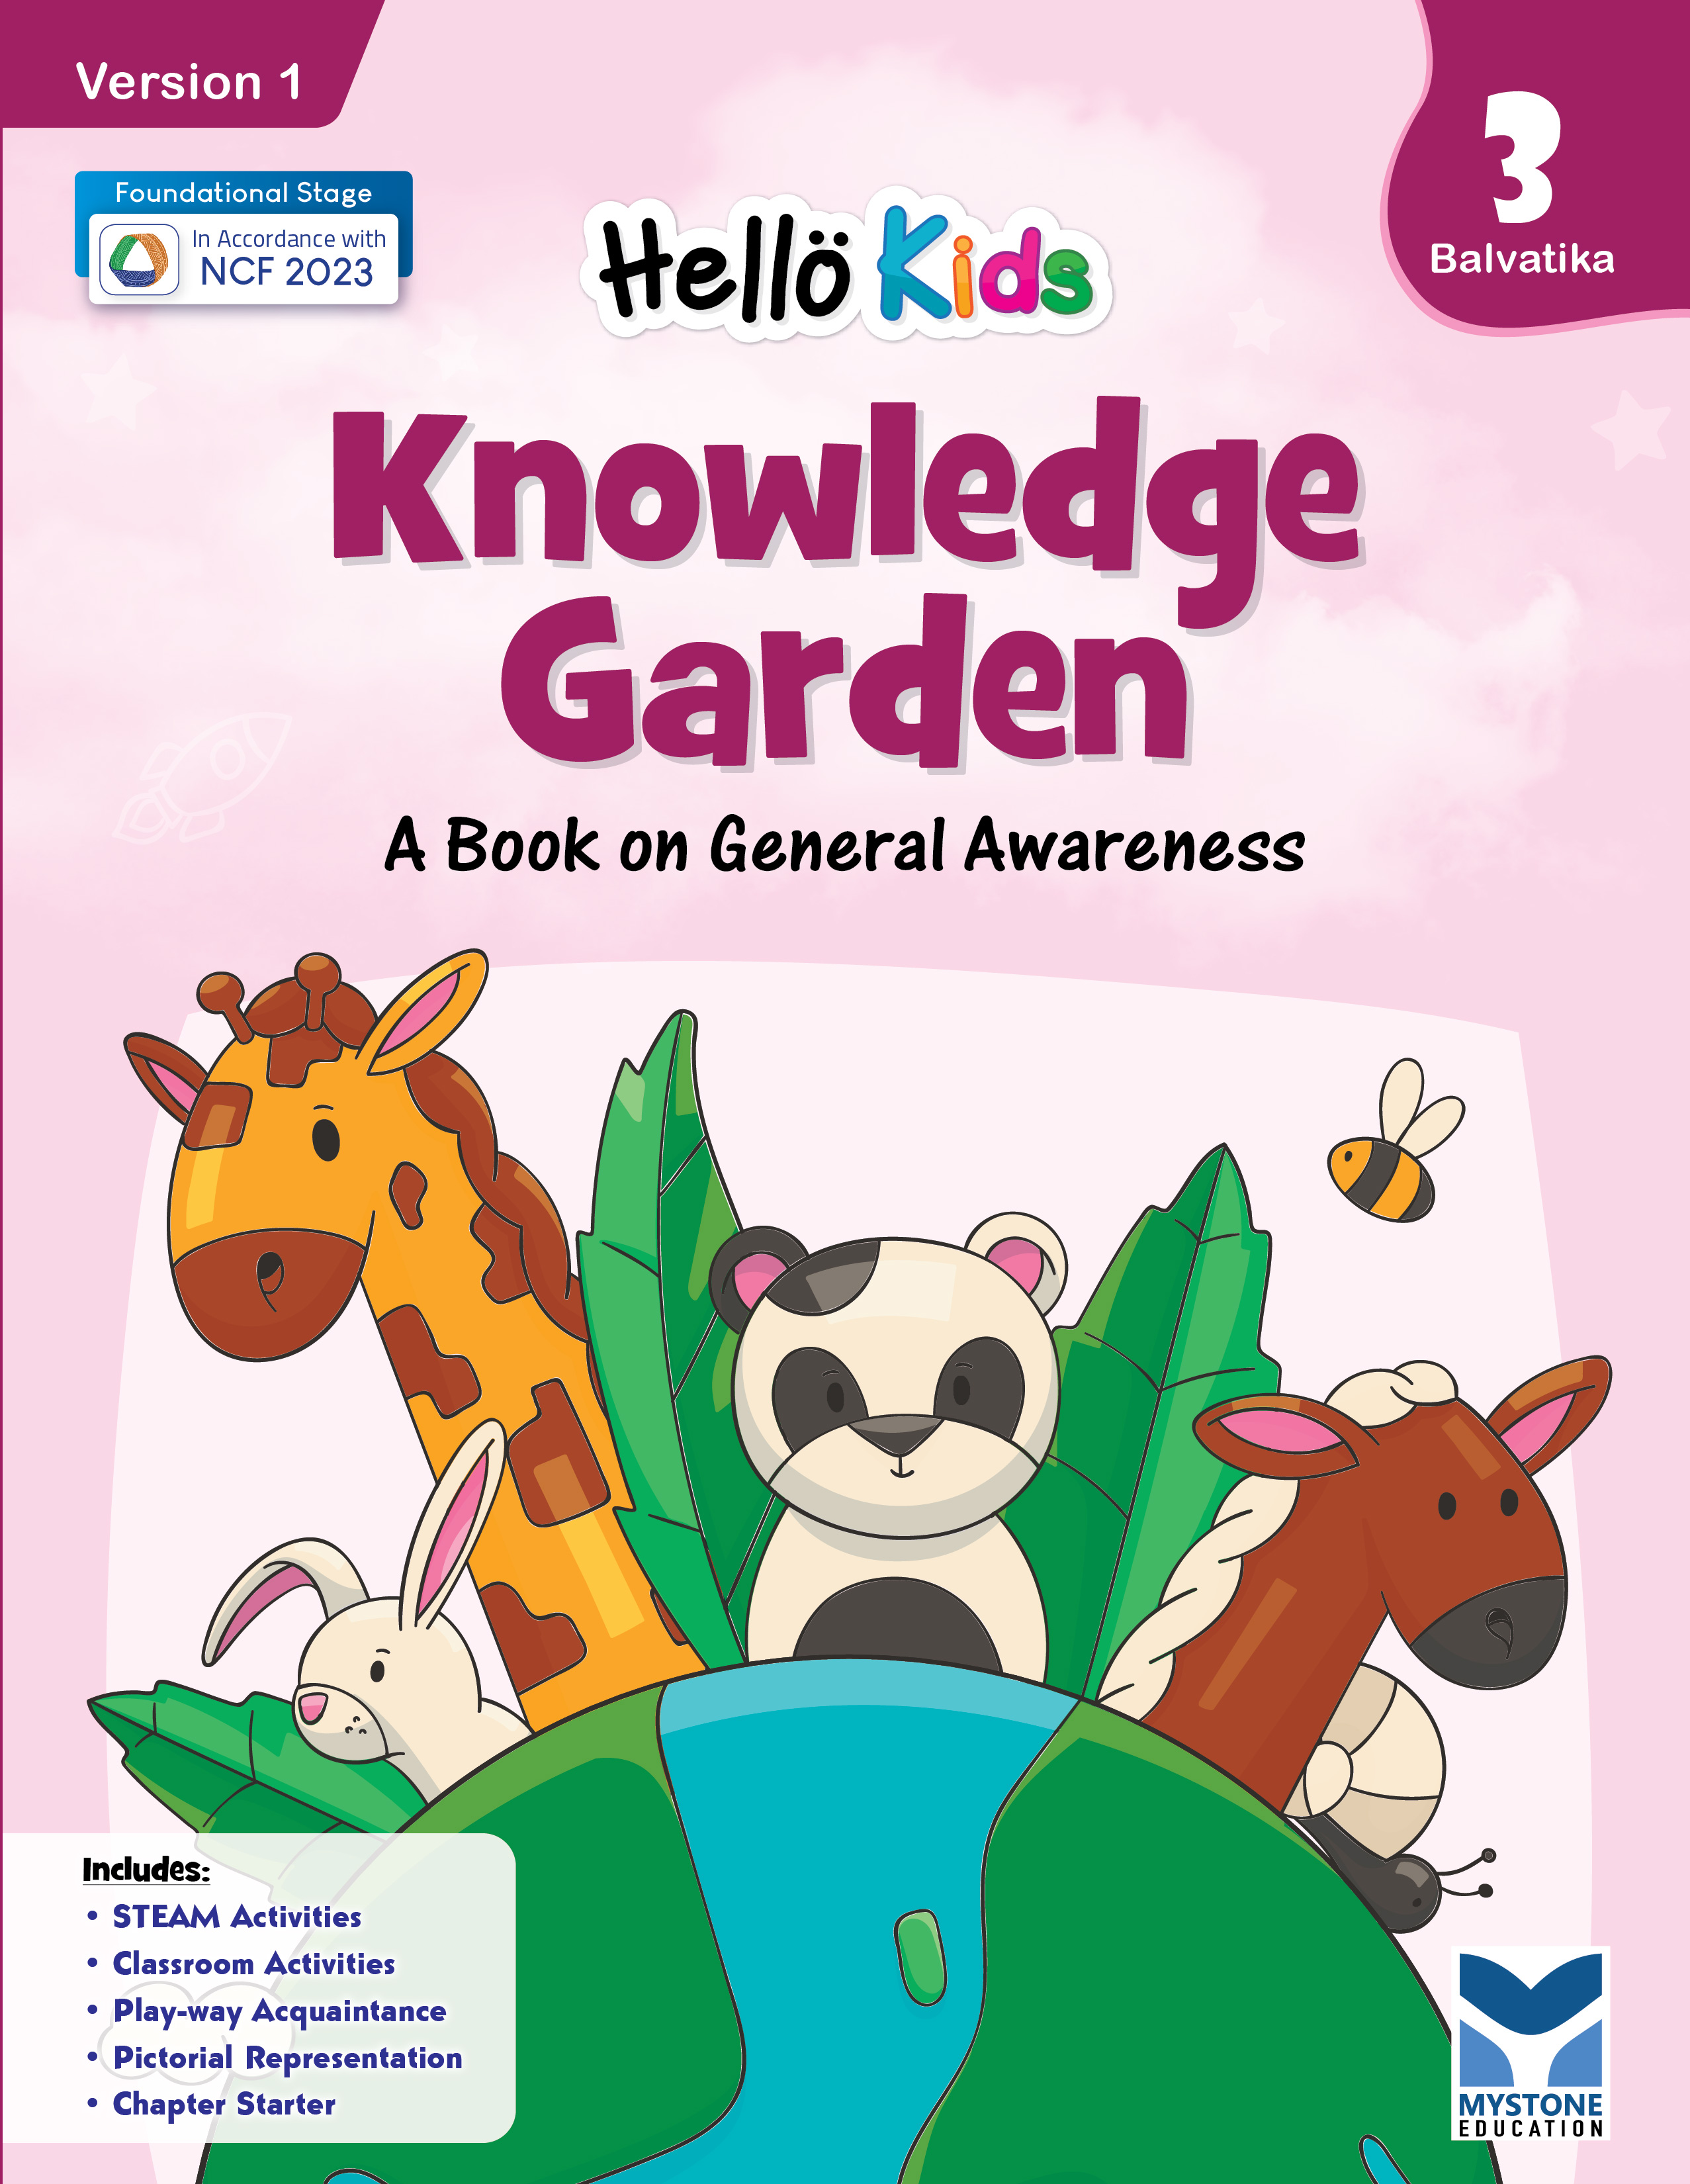 Hello Kids Knowledge Garden Balvatika 3 Ver. 1